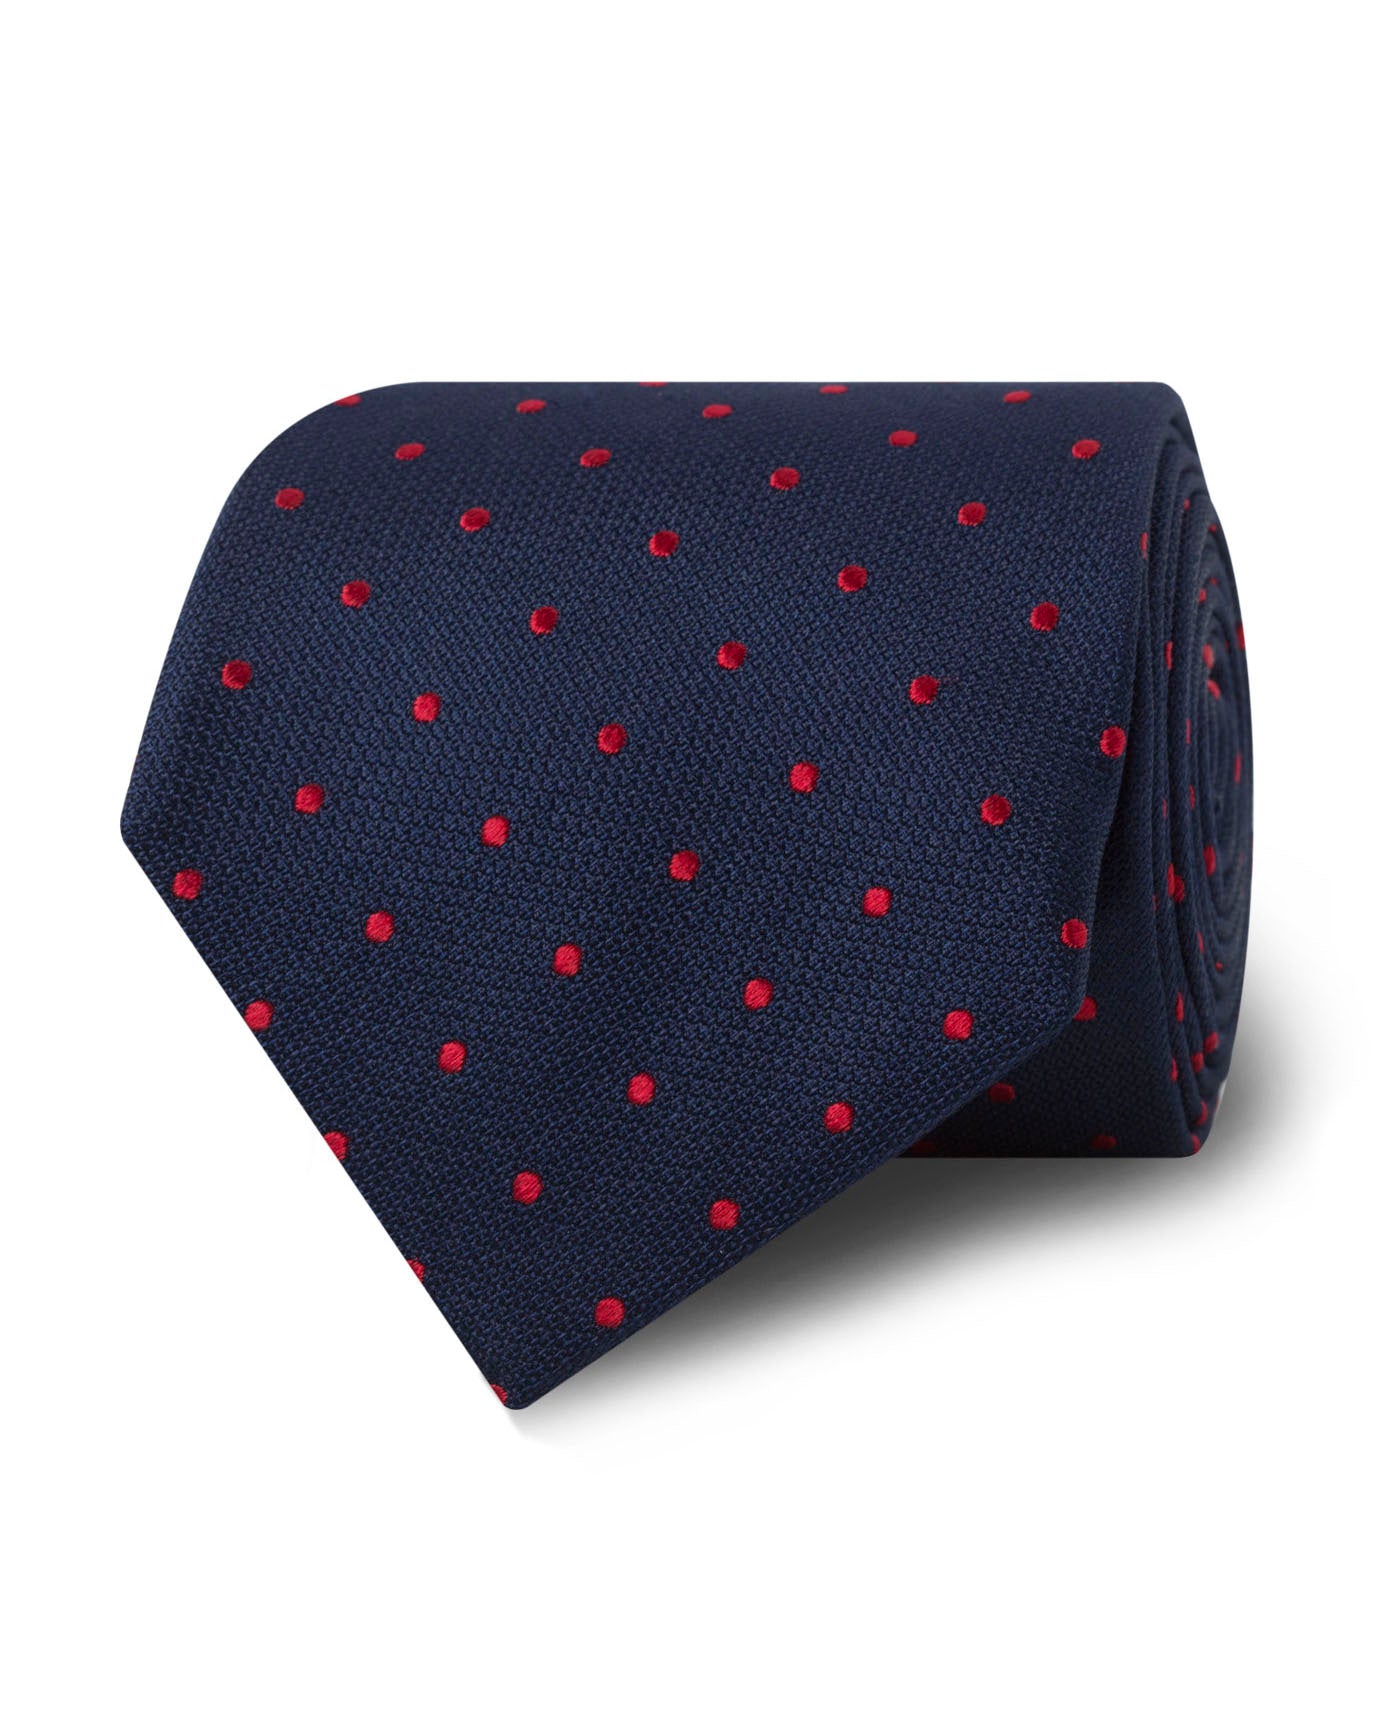 Image 1 of Satin Textured Red Spots Navy Tie